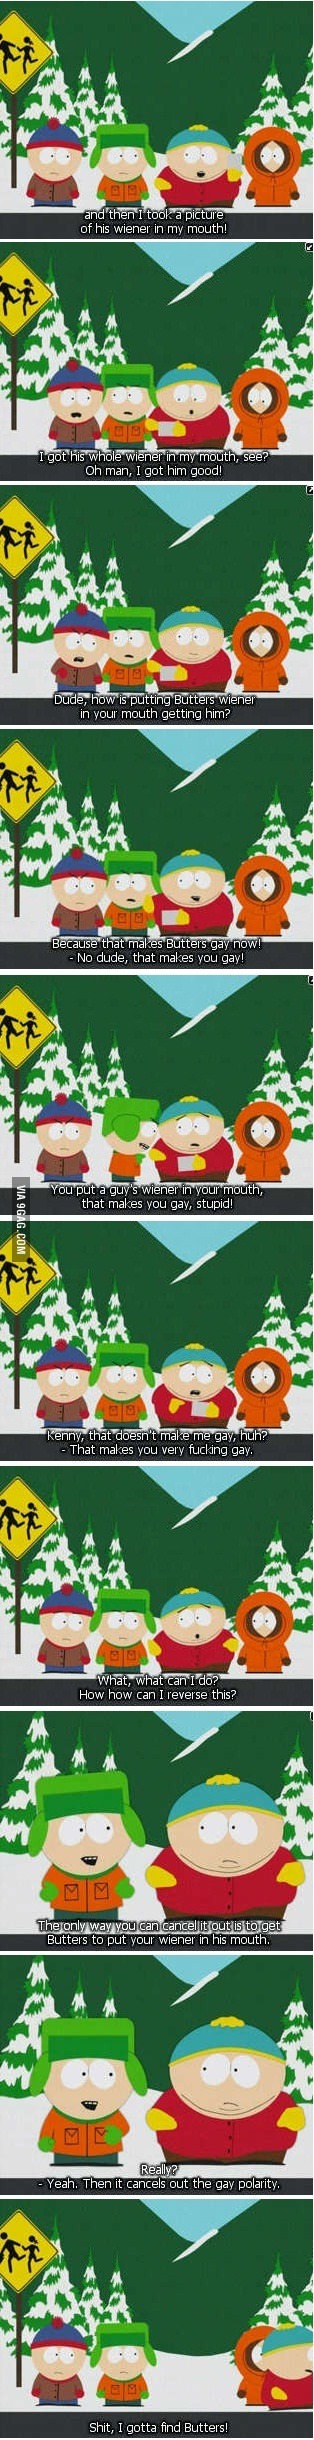 just cartman - meme